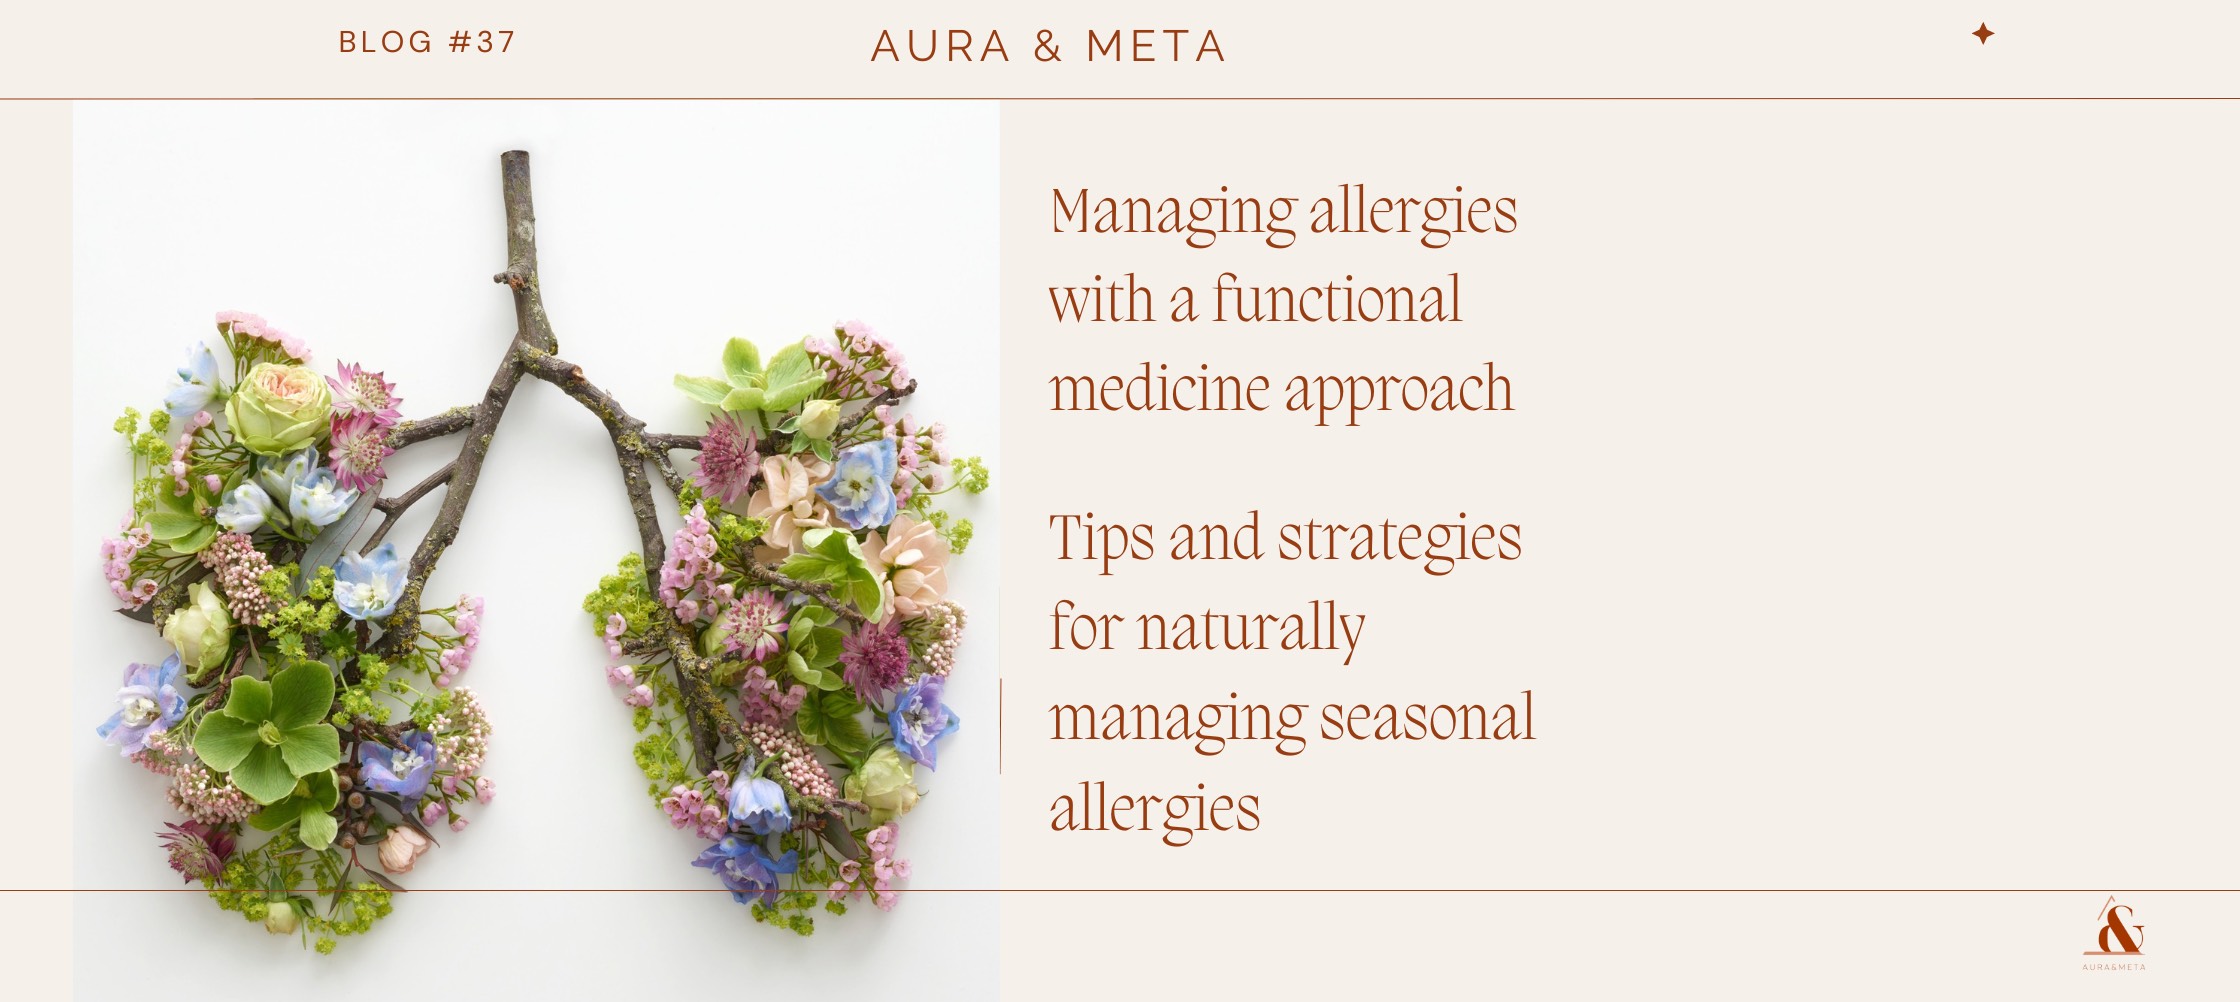 Managing Seasonal Allergies Naturally with Functional Medicine